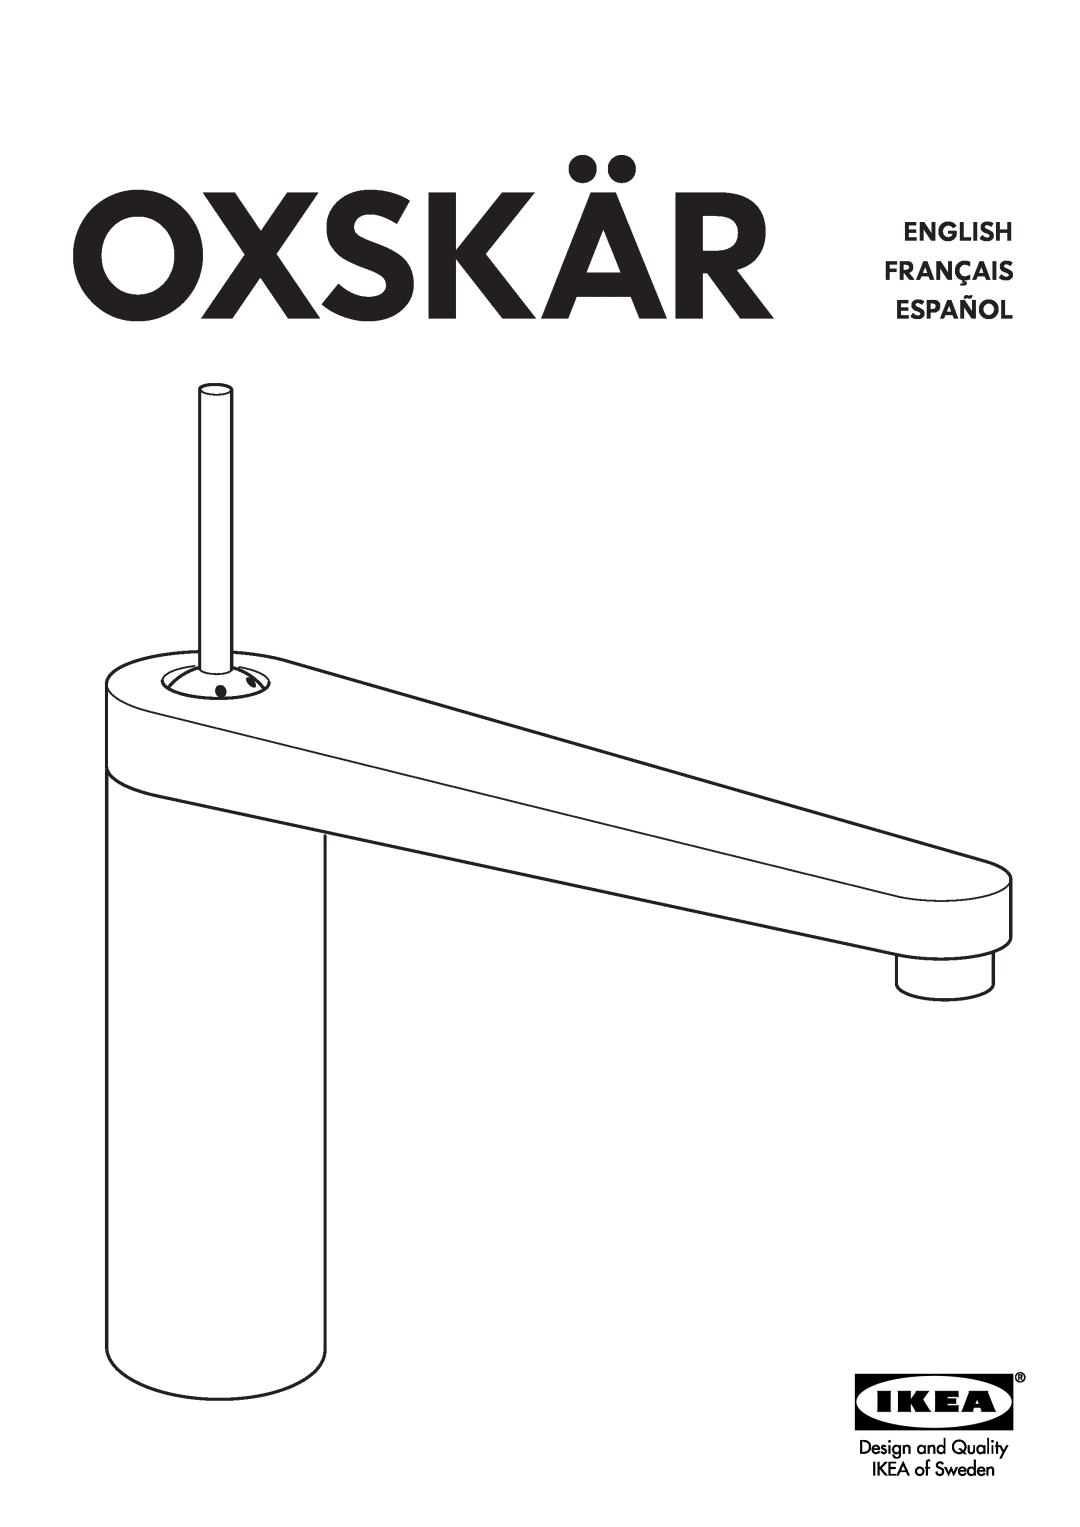 IKEA AA-266584-4 manual Oxskär English Français Español 